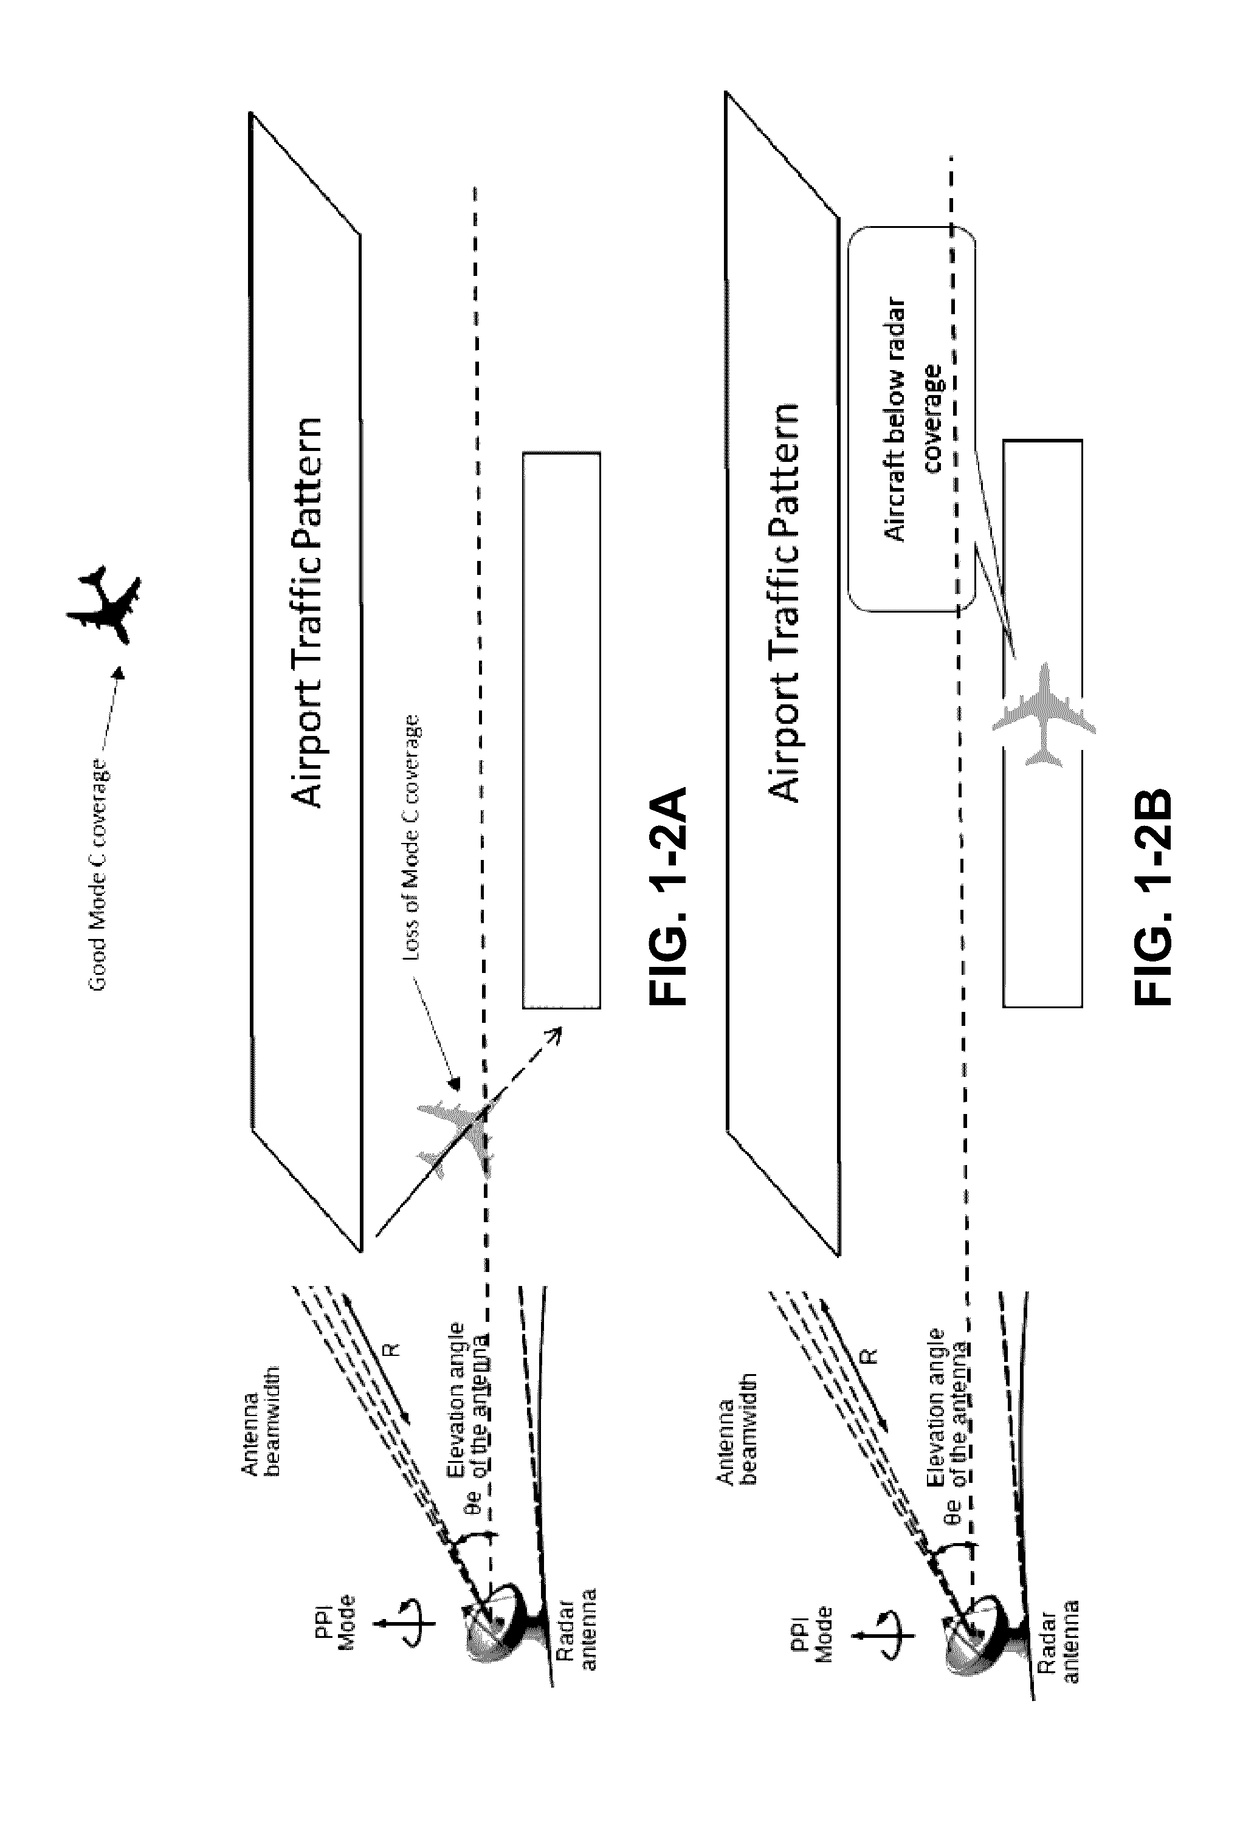 Estimating aircraft operations at airports using transponder data